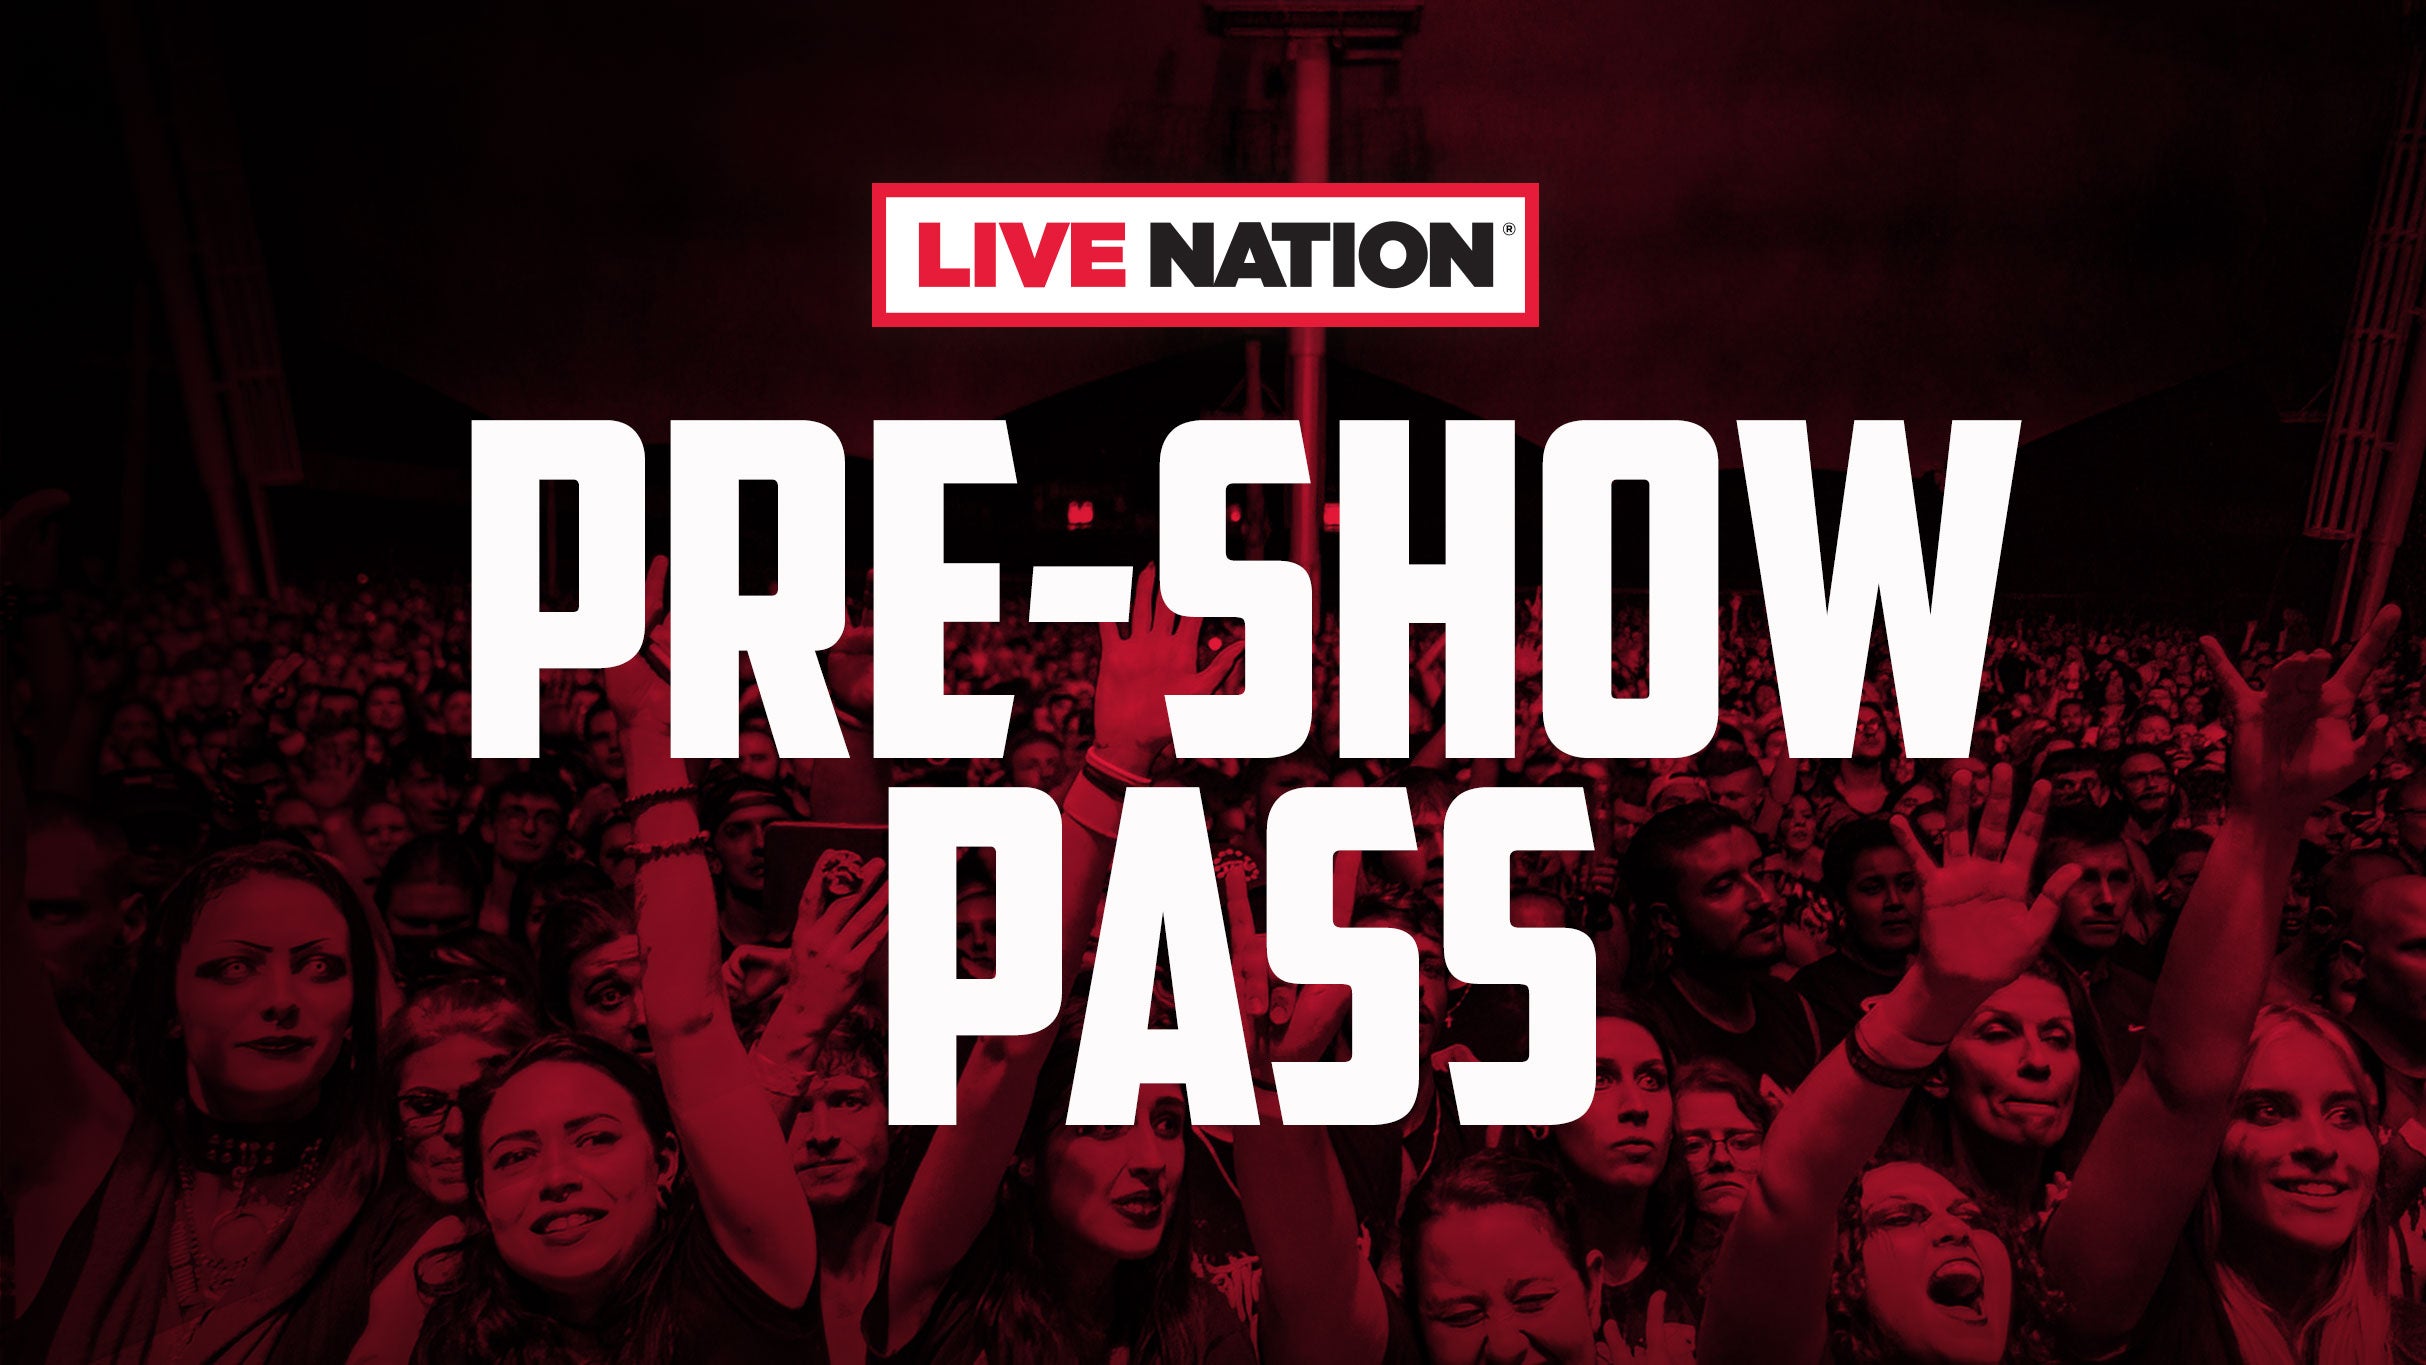 Live Nation Pre-Show Pass presale information on freepresalepasswords.com